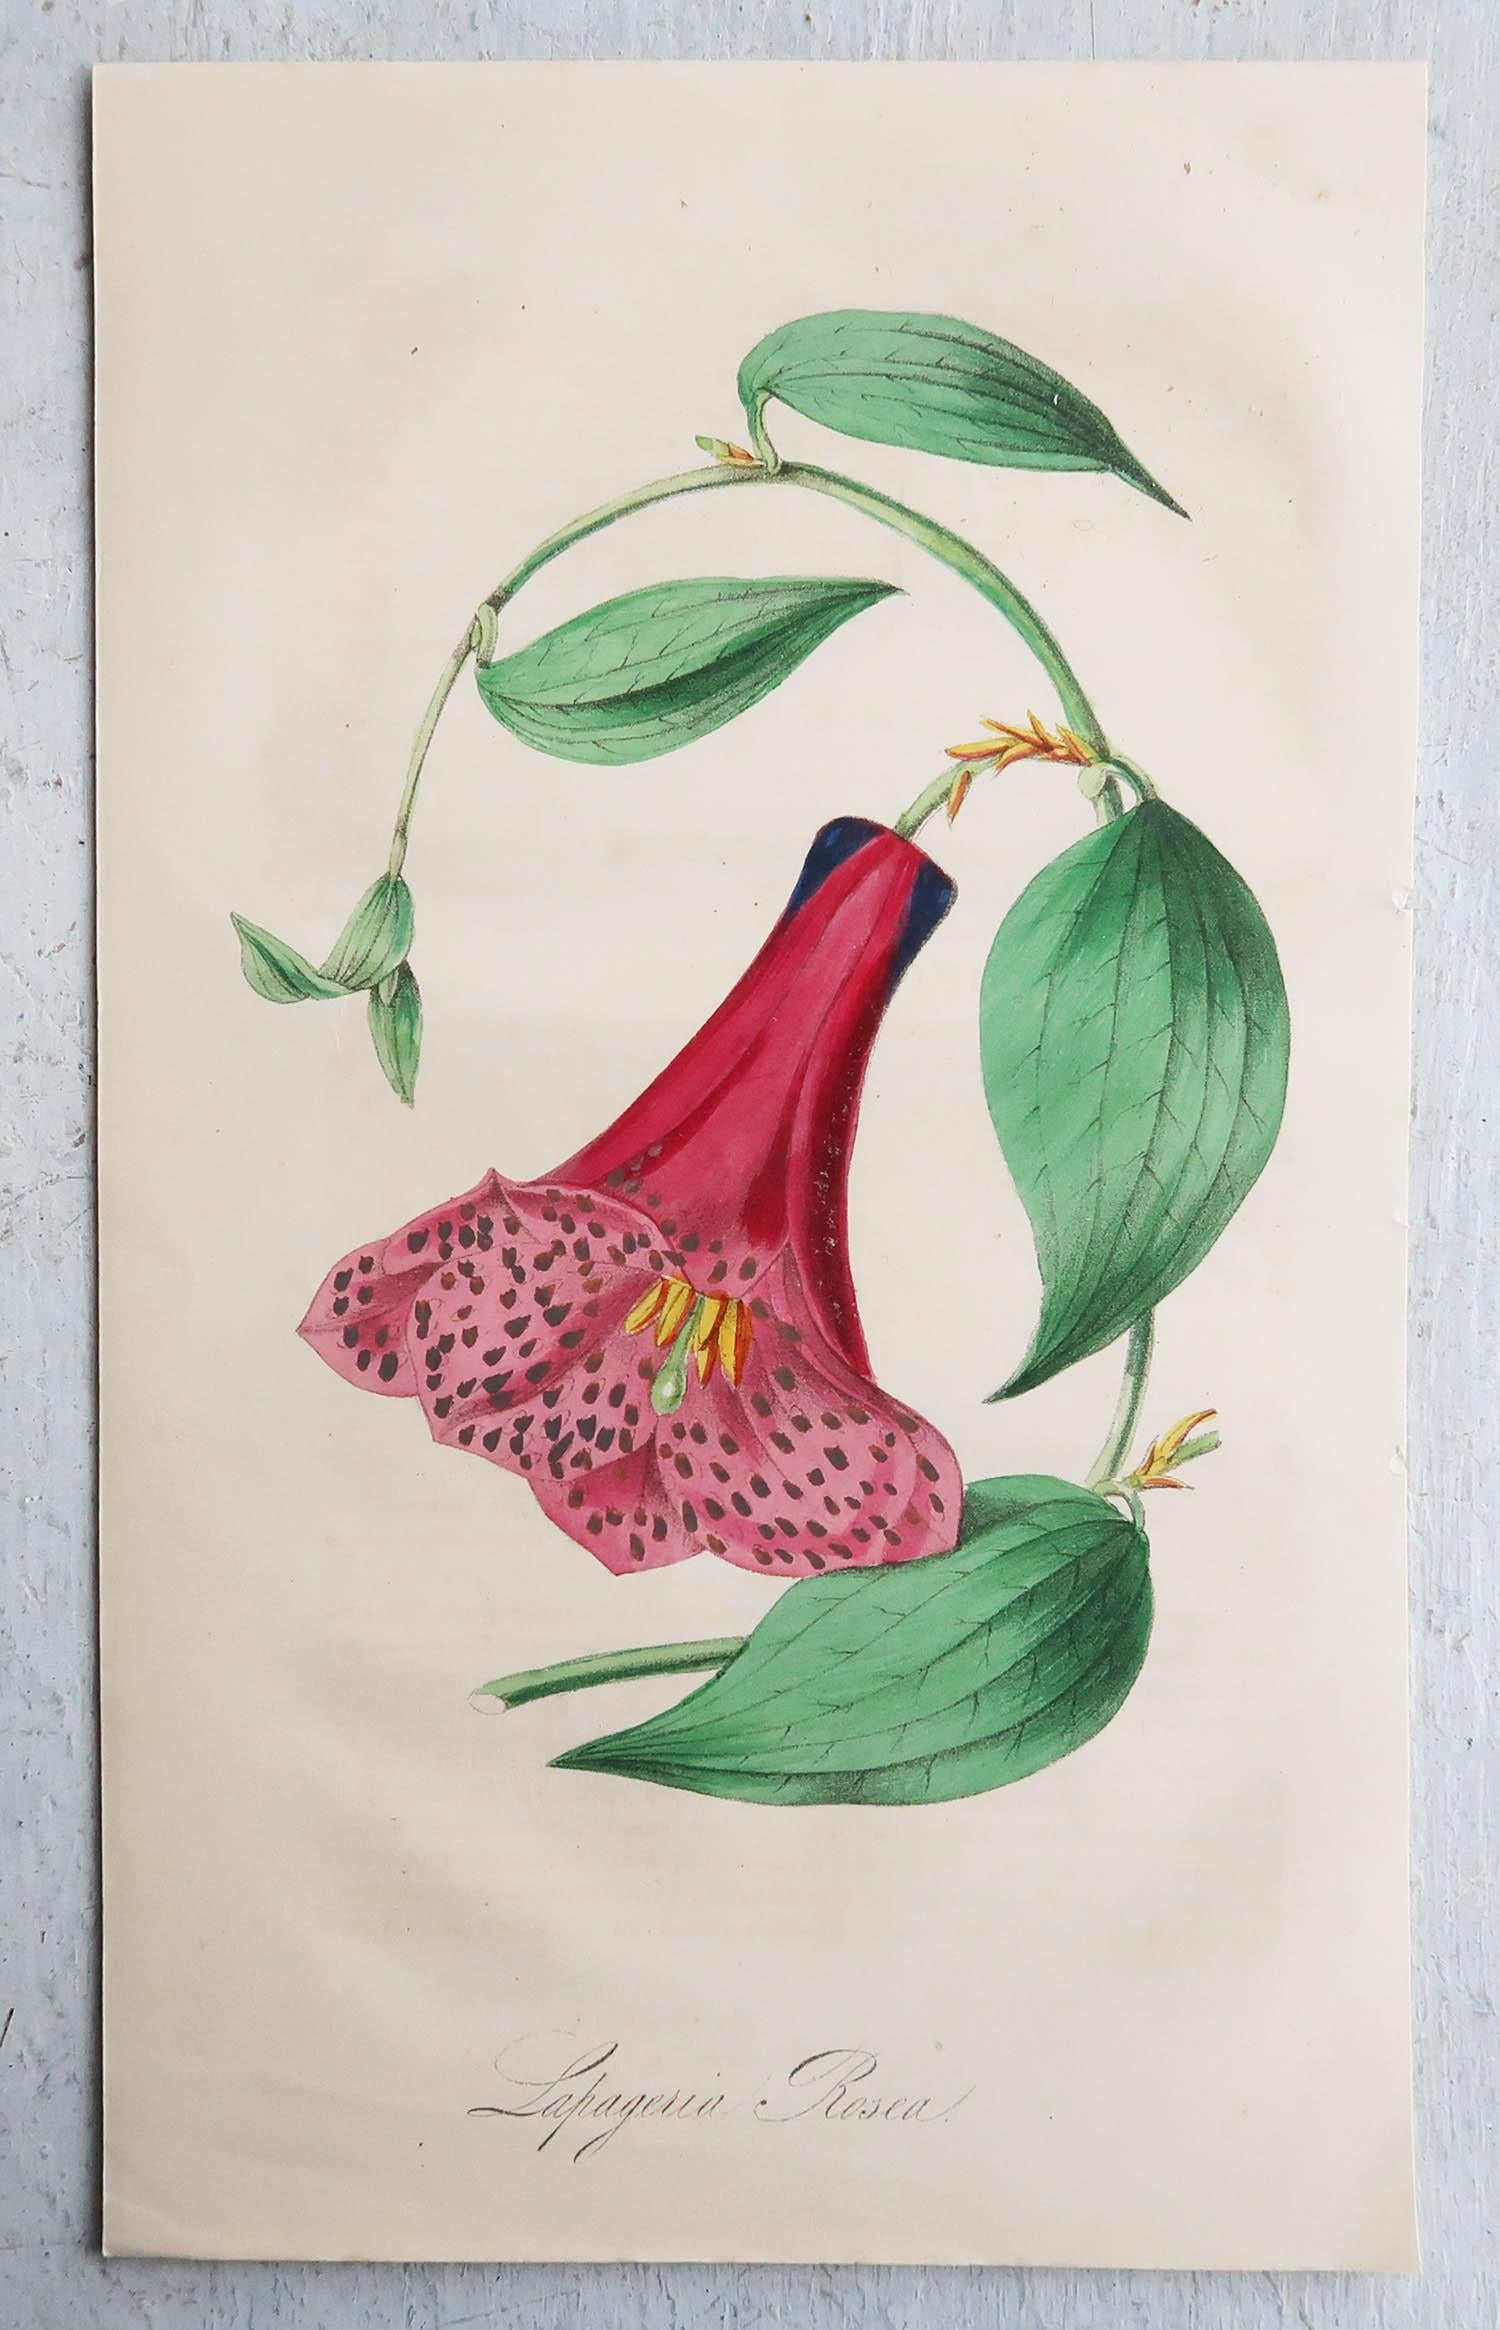 Other Set of 12 Original Antique Botanical Prints, circa 1840